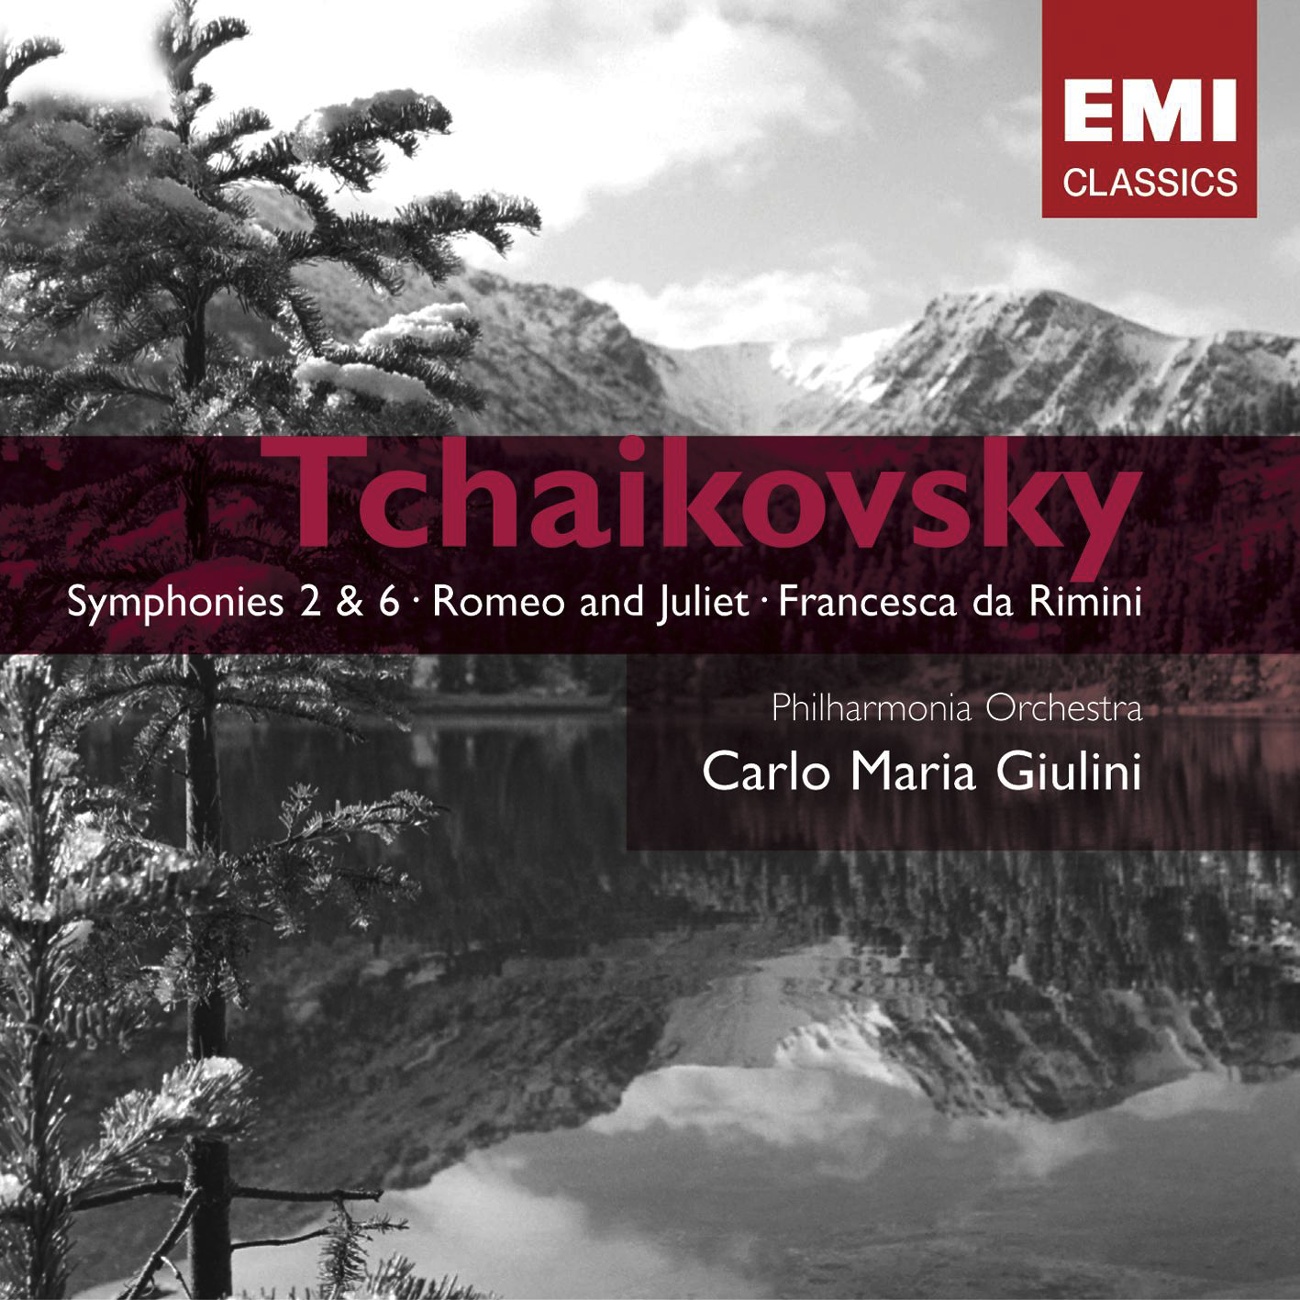 Symphony No. 6 in B minor, 'Pathétique' Op. 74 (1989 Digital Remaster): Allegro molto vivace